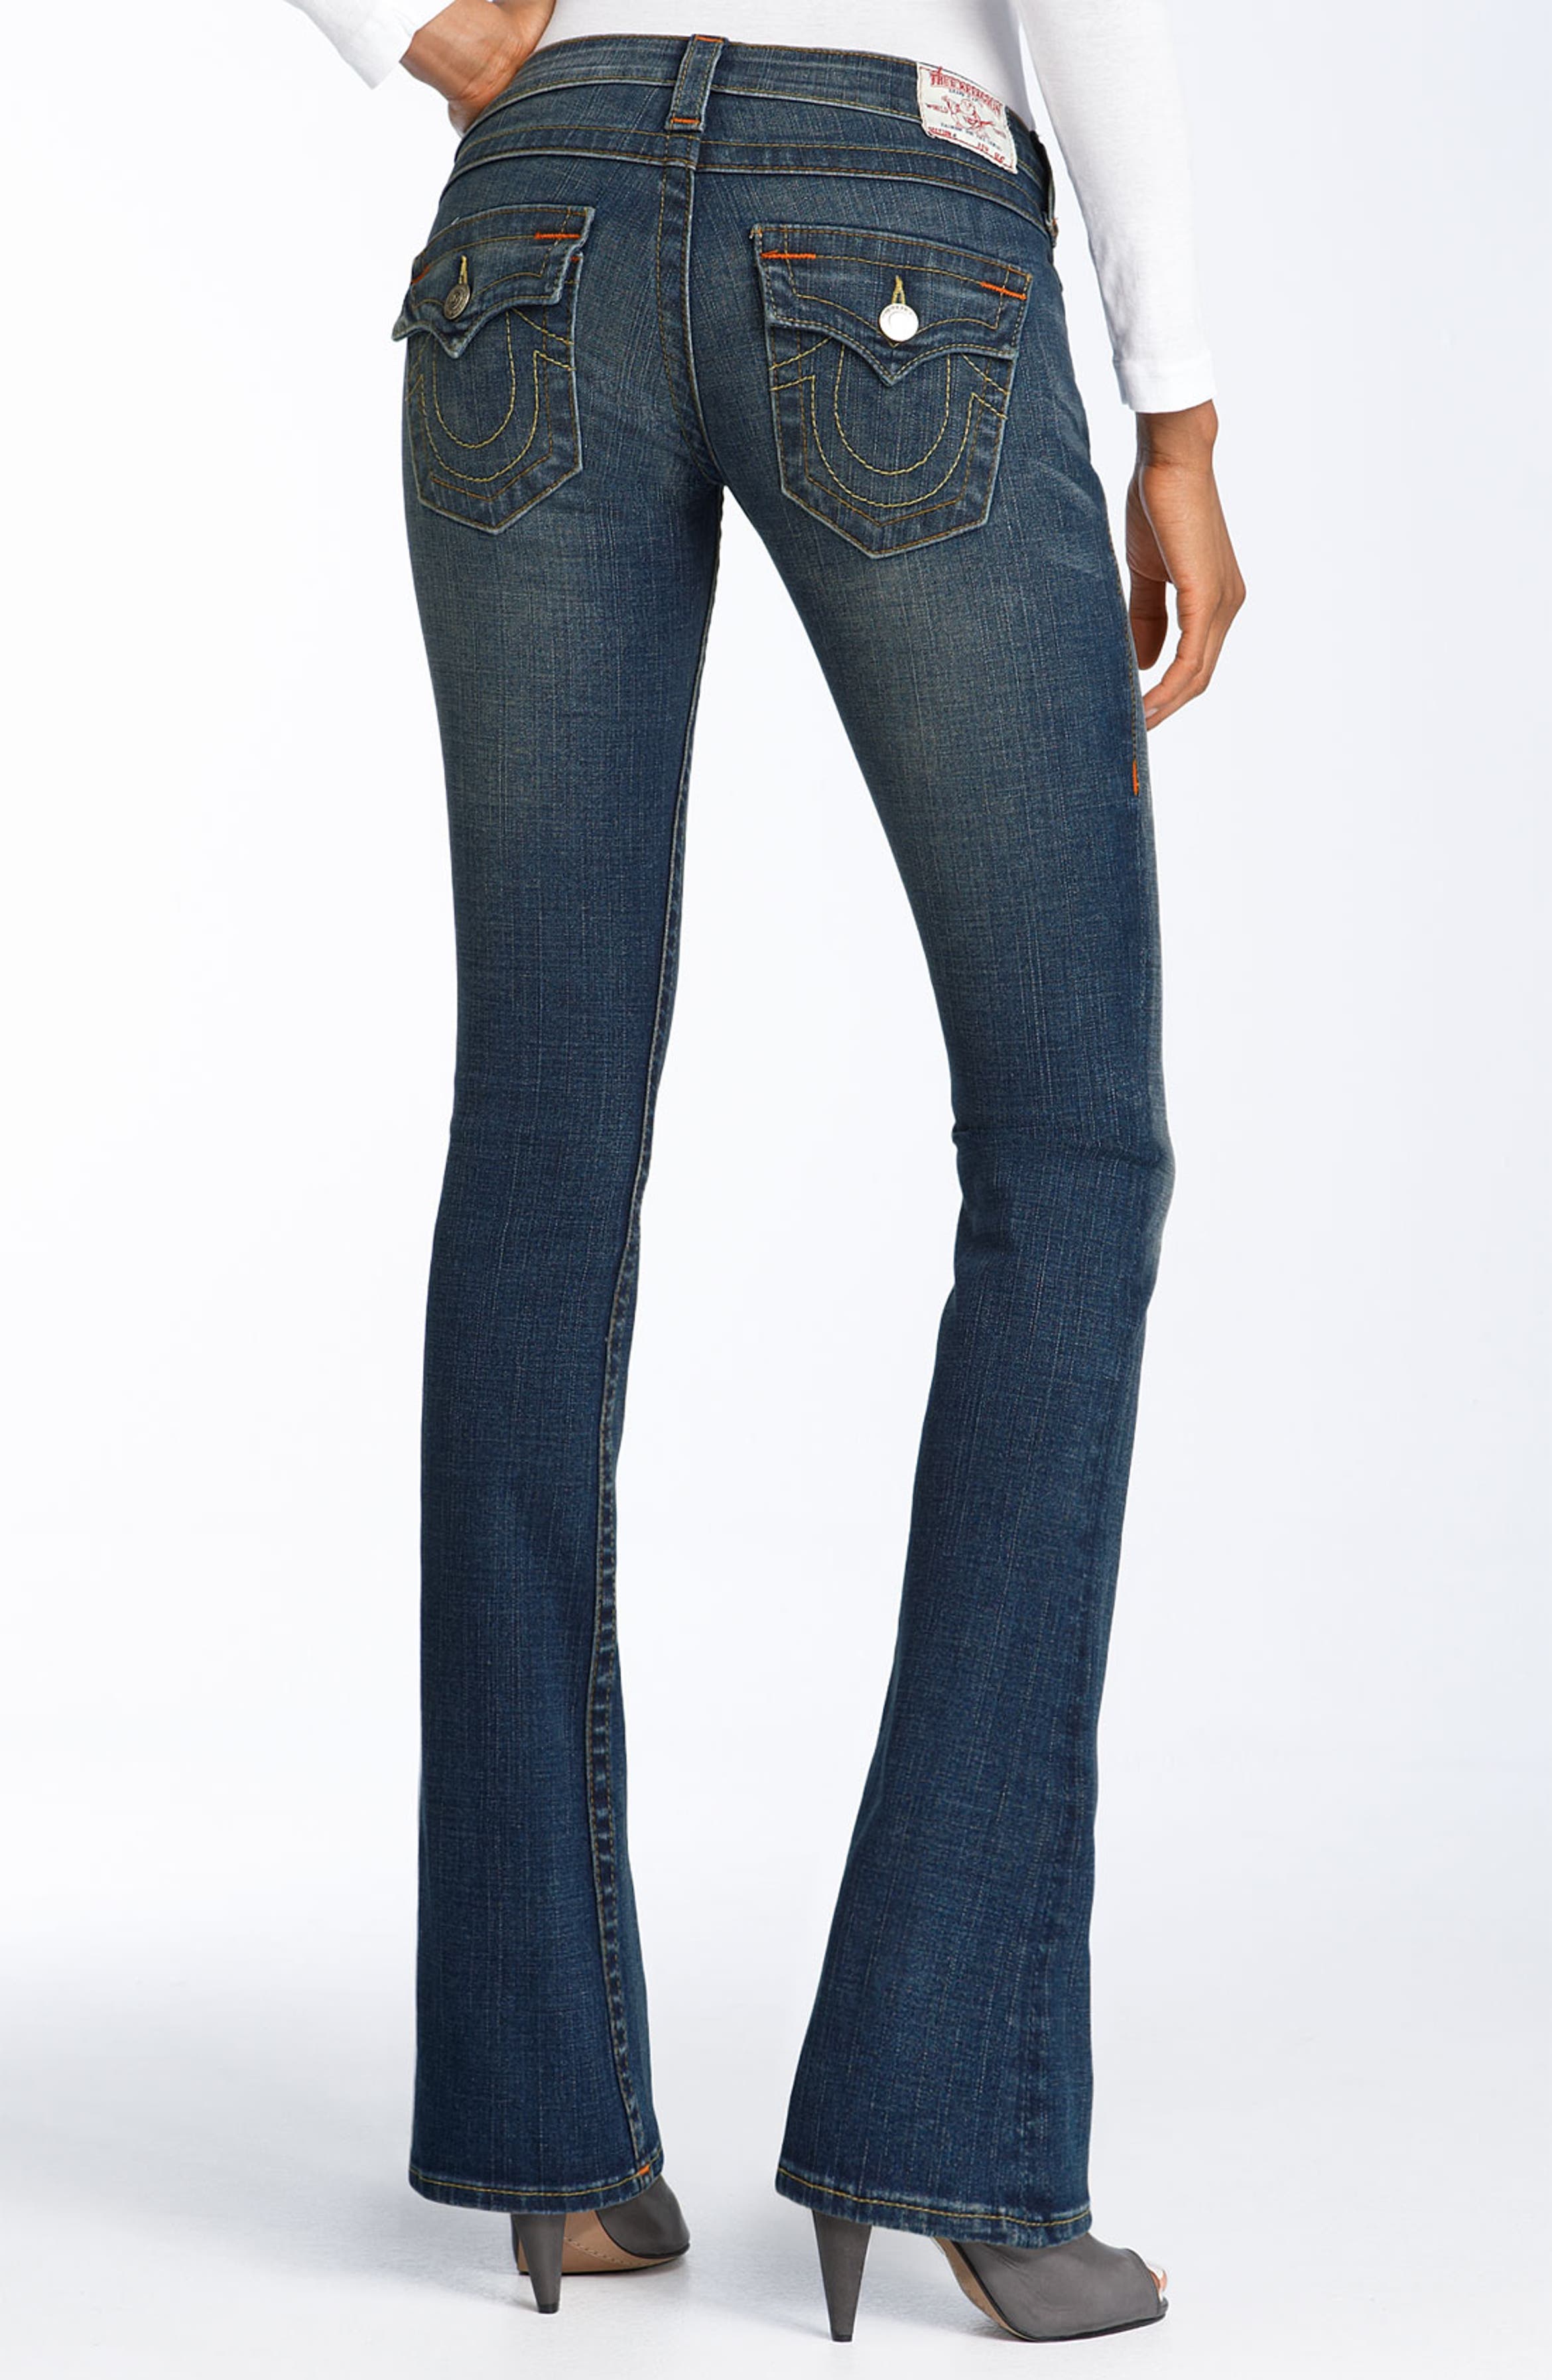 True Religion Brand Jeans 'Tony' Lean Bootcut Stretch Jeans (Lonestar ...